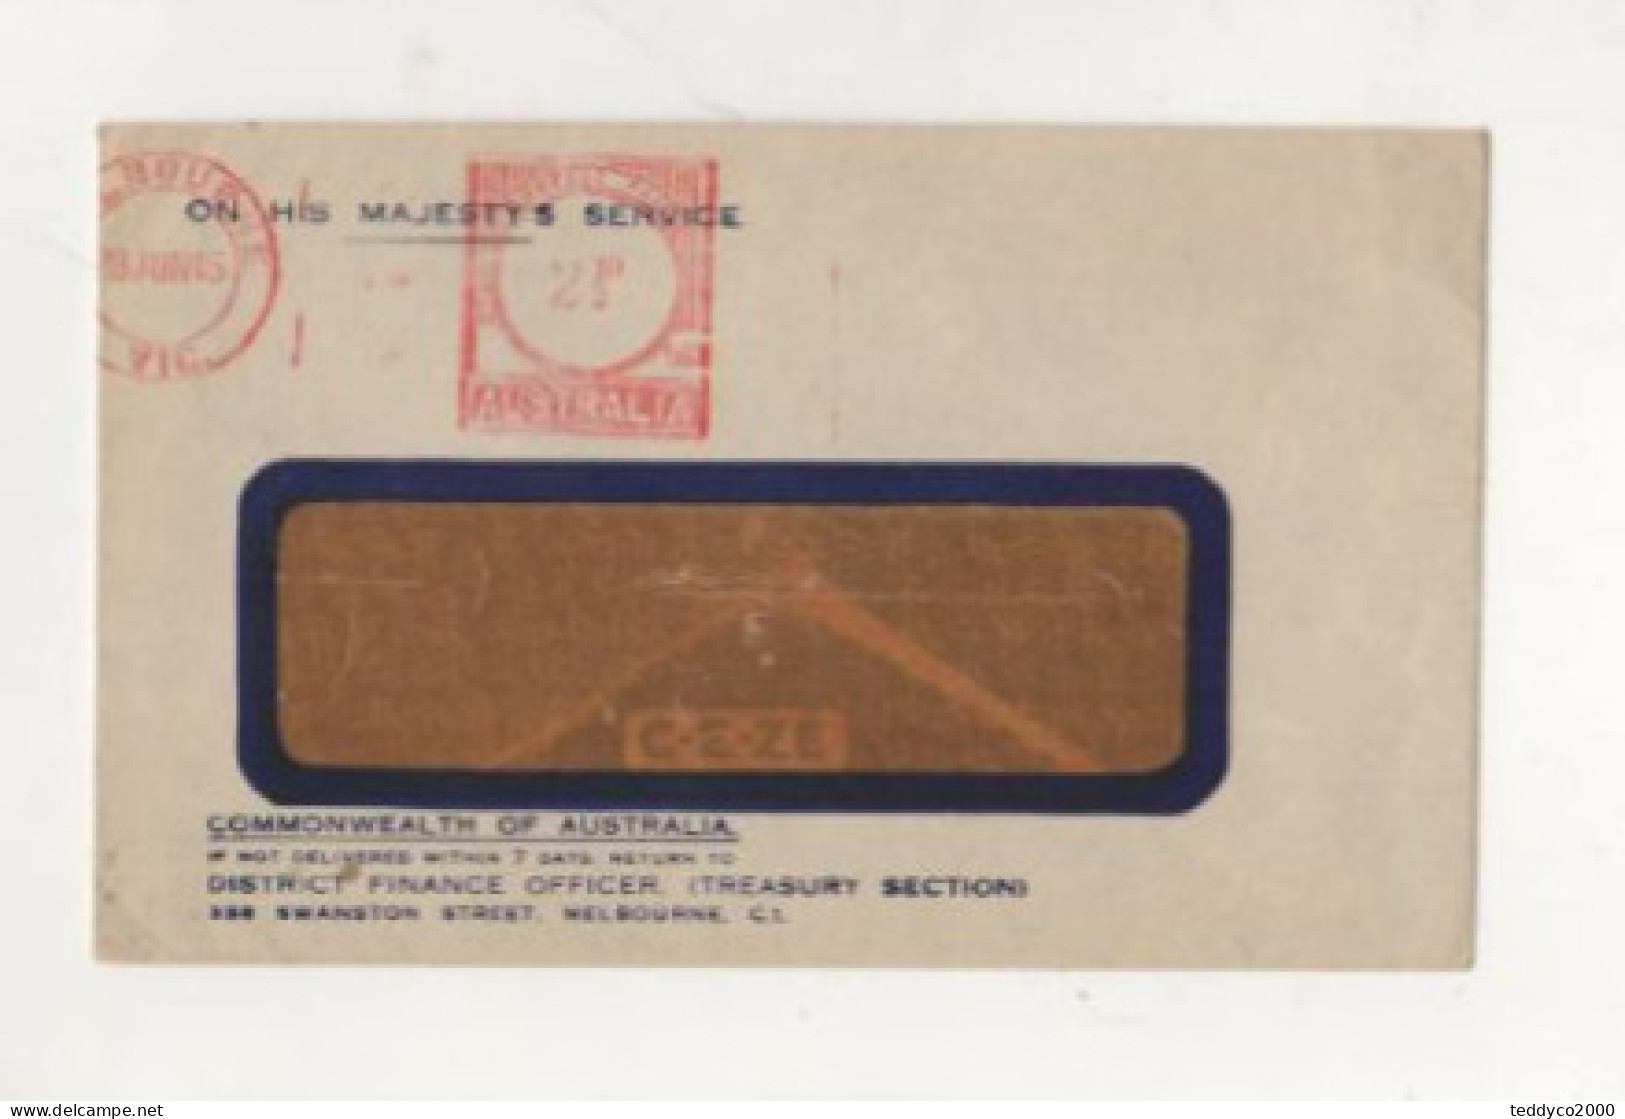 AUSTRALIA 2 1/2D "ON HIS MAJESTY SERVICE" 28 JUN '45 - Lettres & Documents